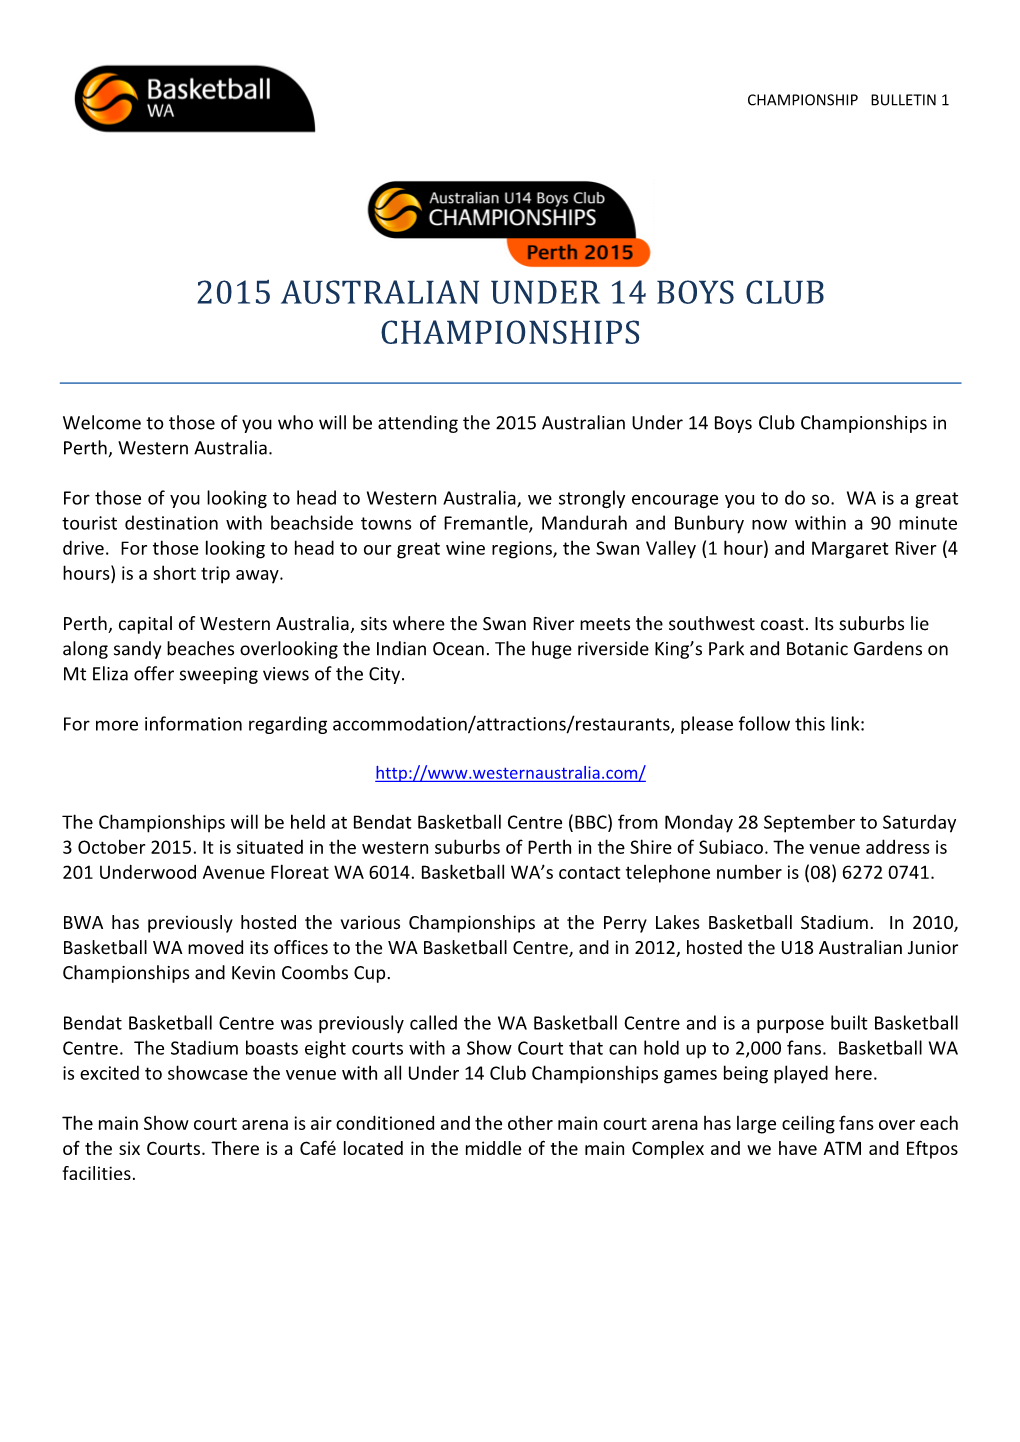 2015 Australian Under 14 Boys Club Championships